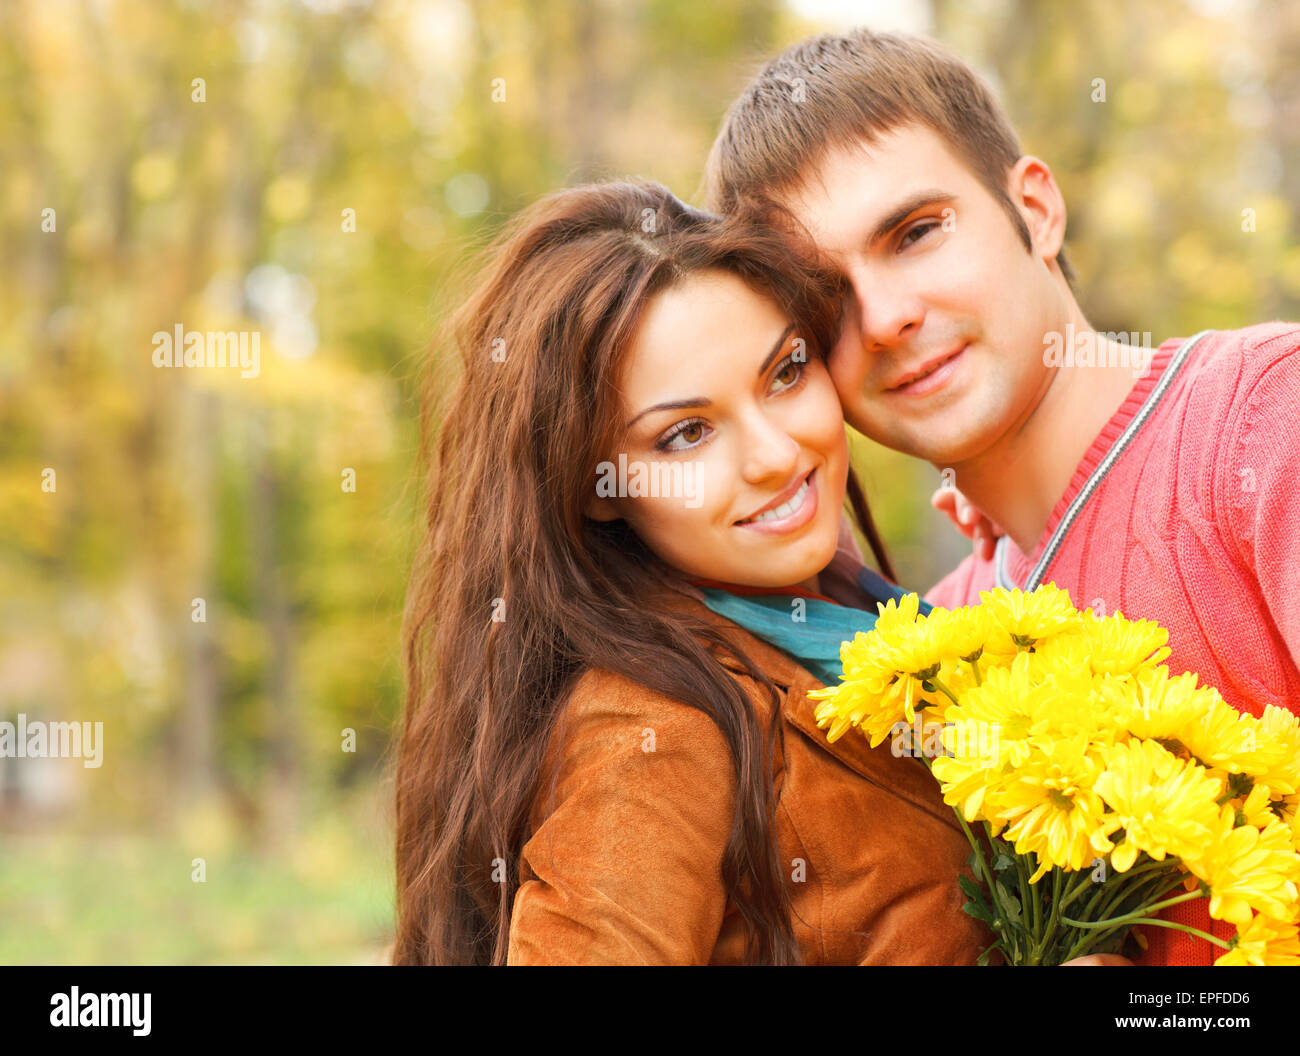 Portrait of couple enjoying golden autumn fall season Stock Photo